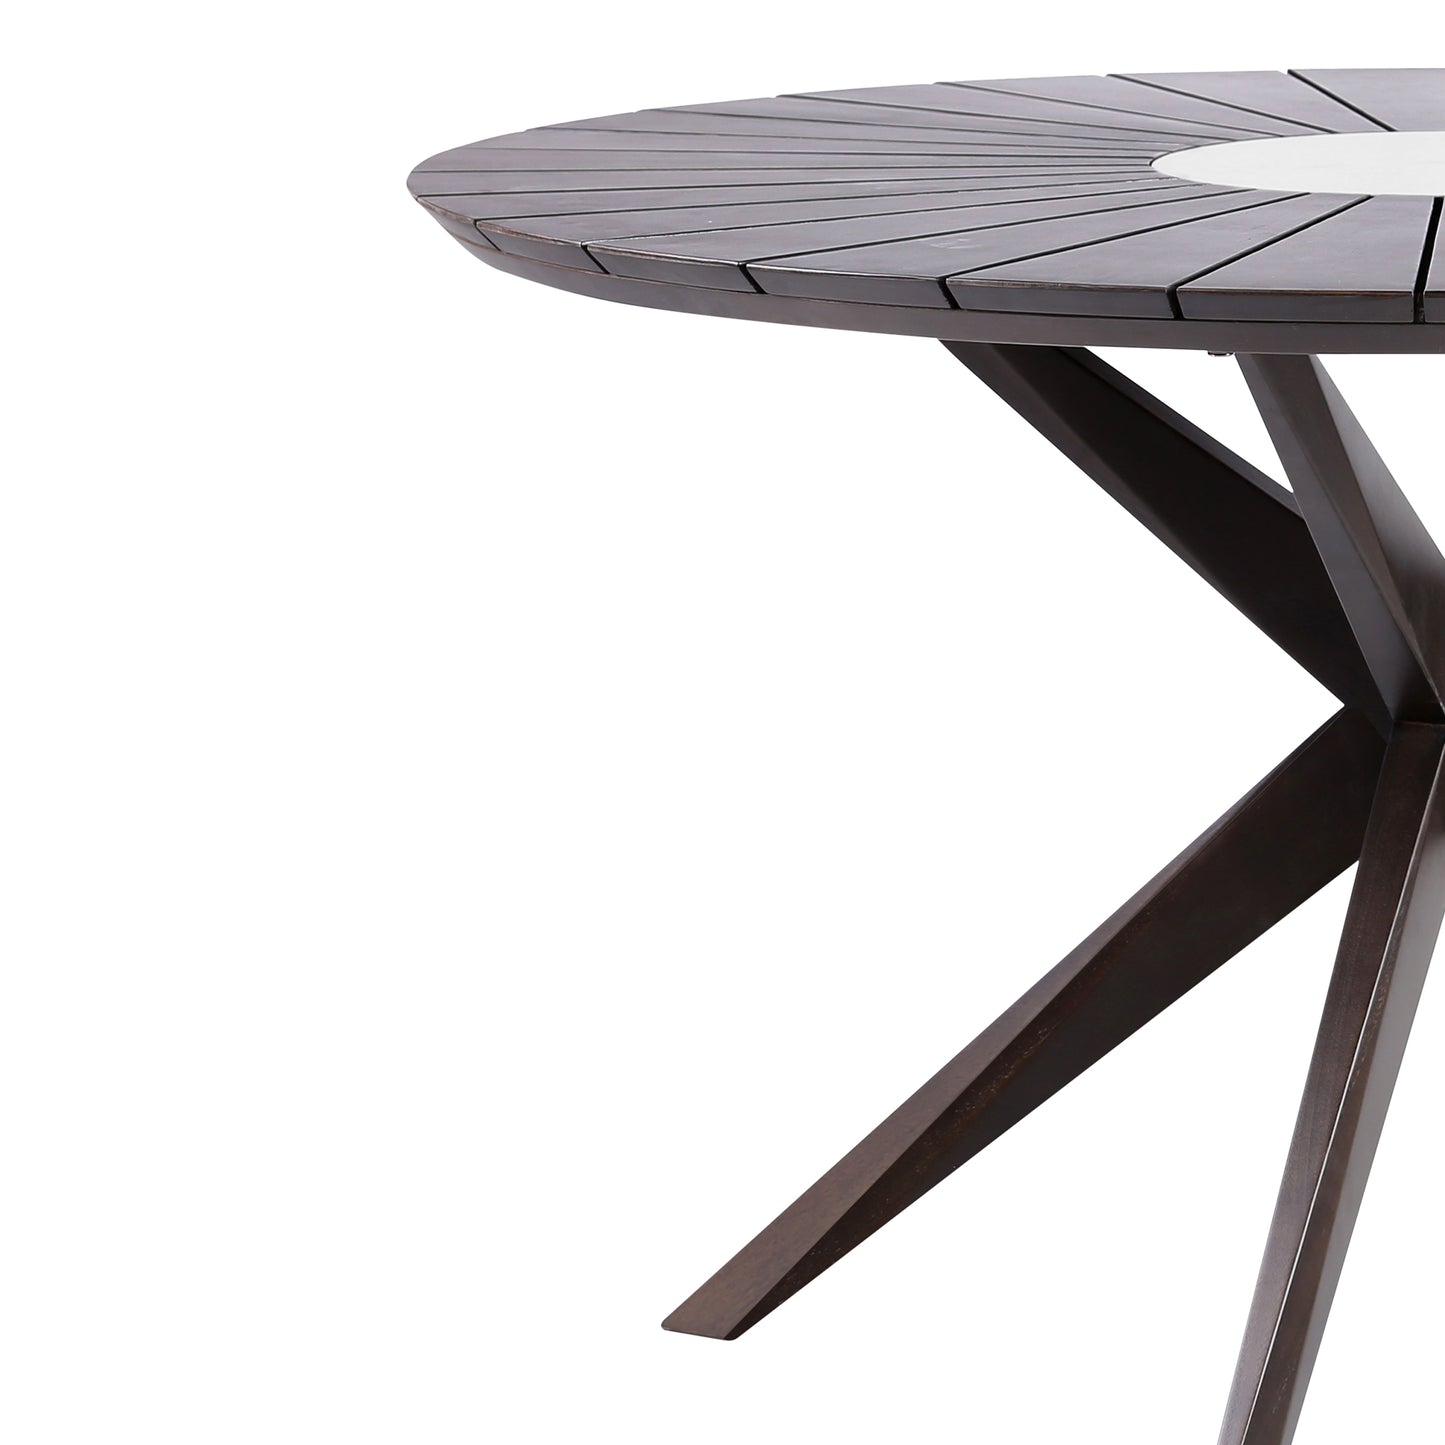 Sachi Outdoor Dark Eucalyptus Wood and Concrete Round Dining Table